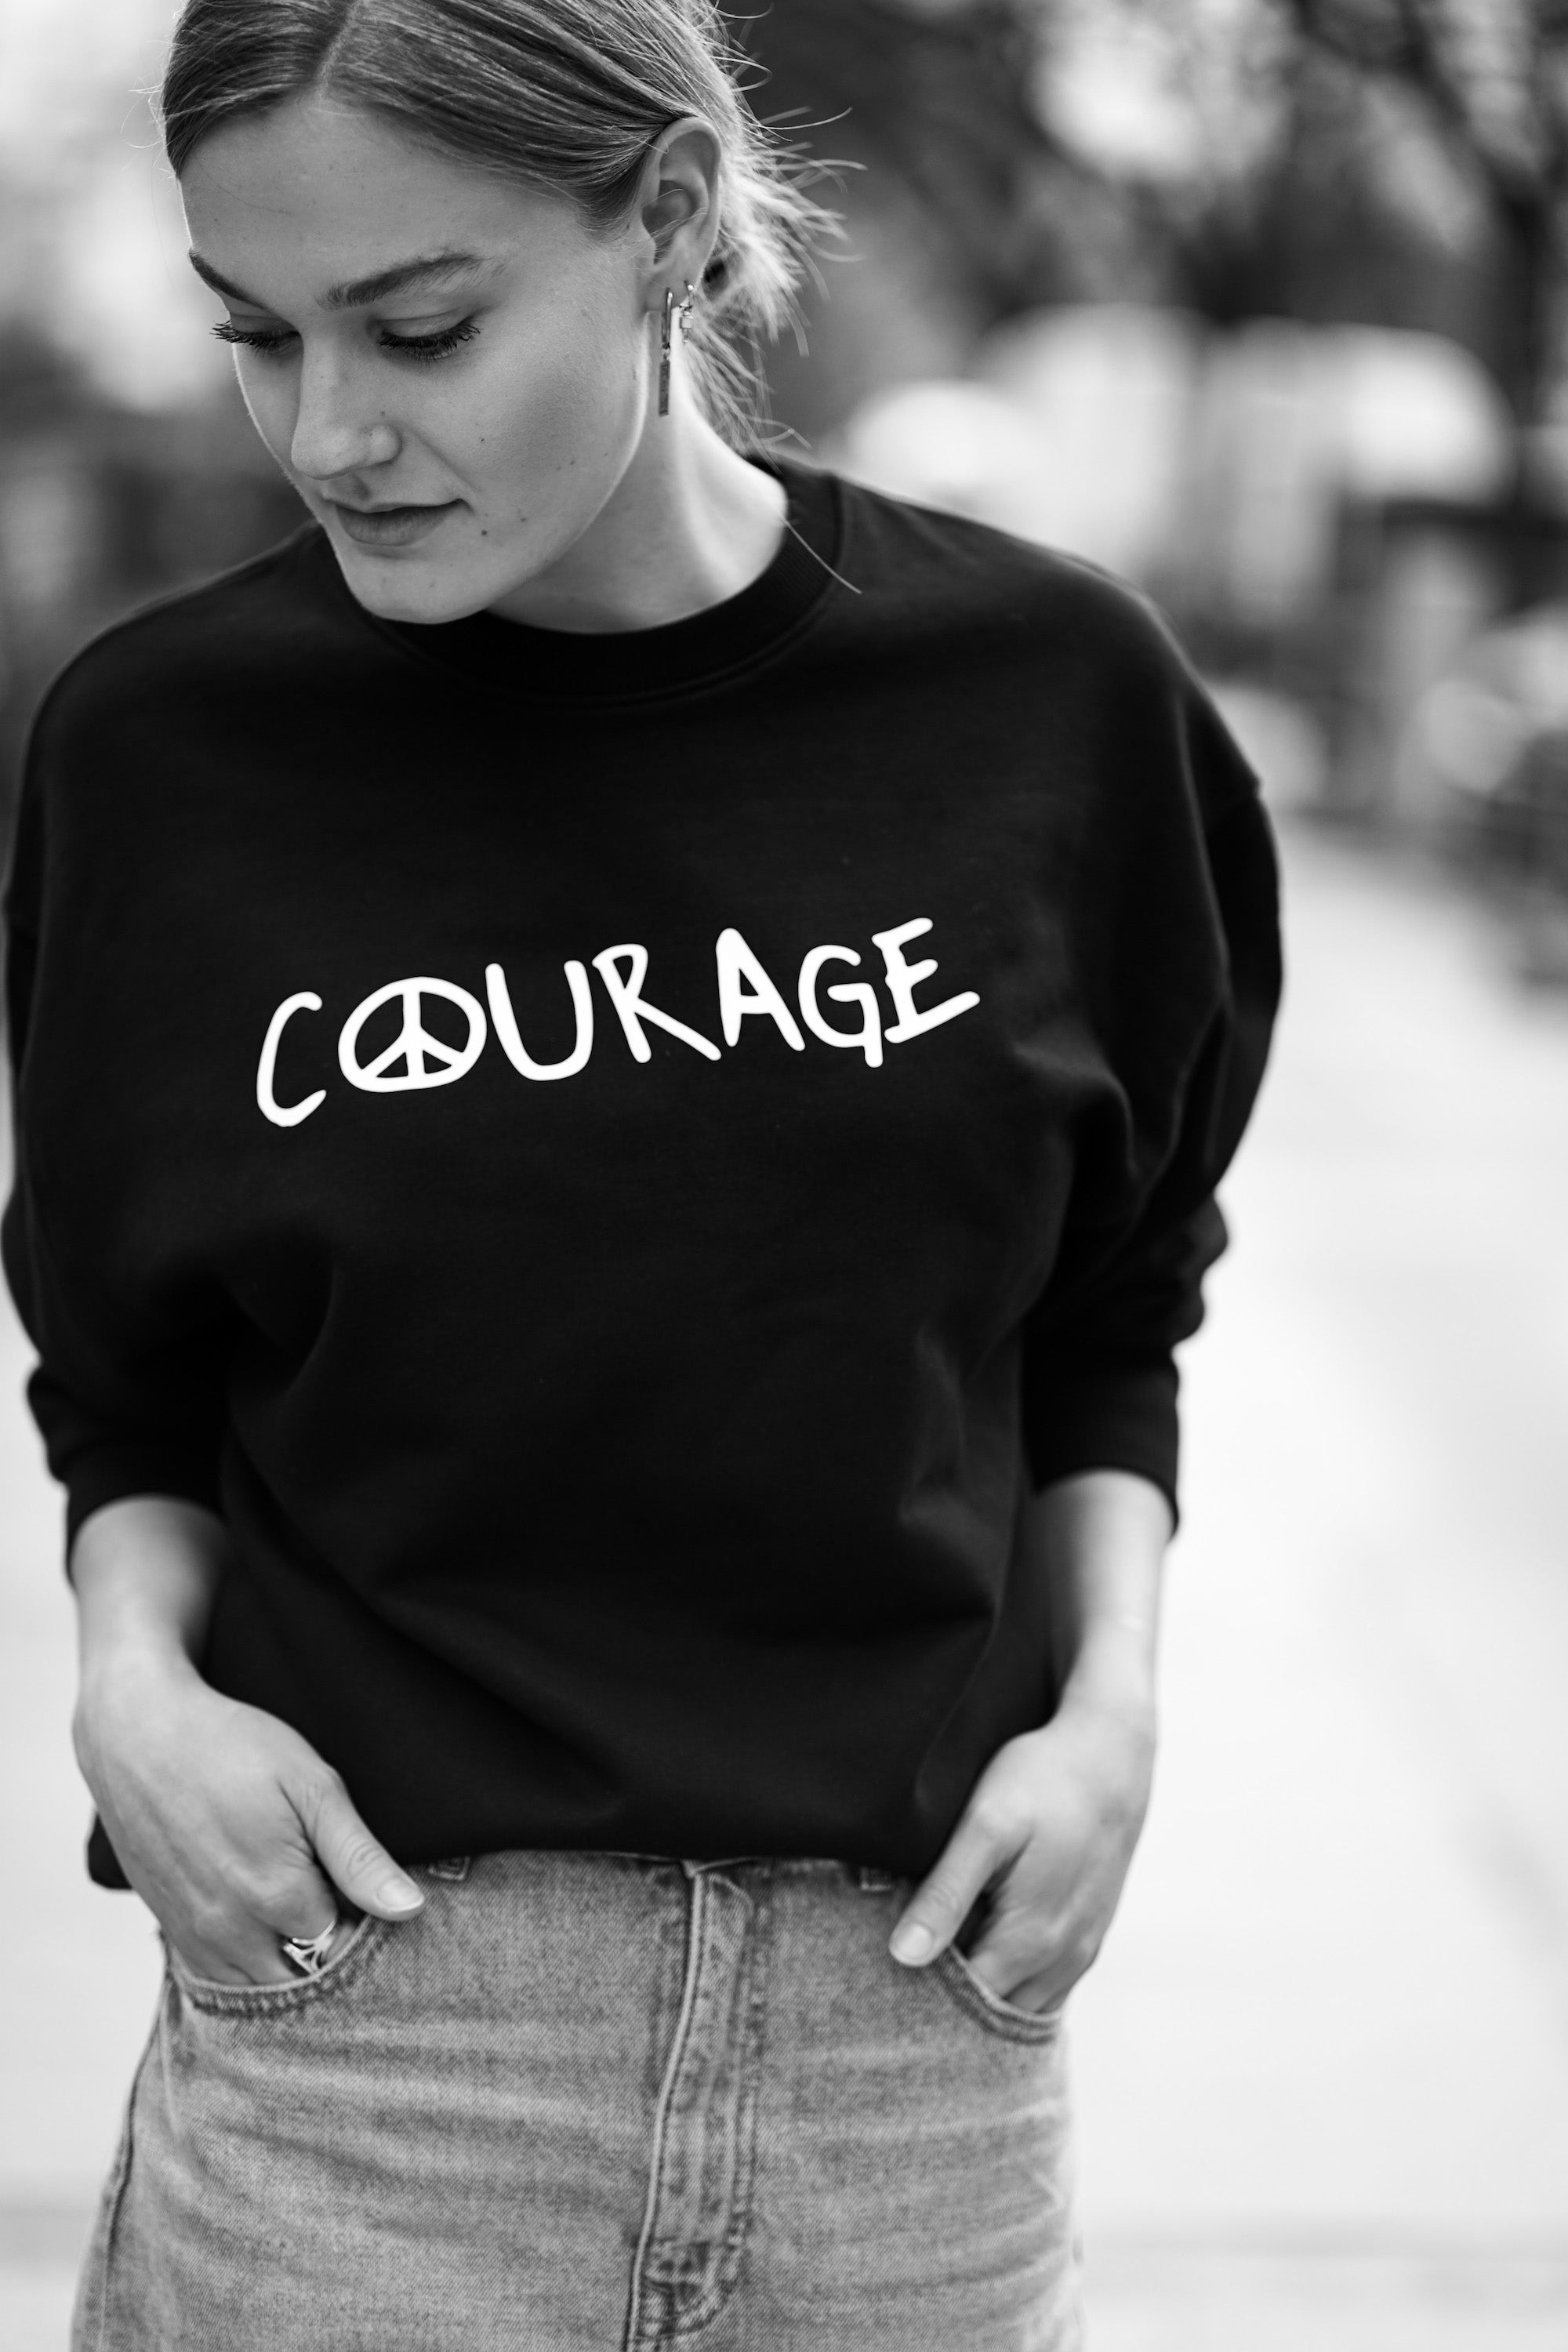 Courage Sweater - Black/White 